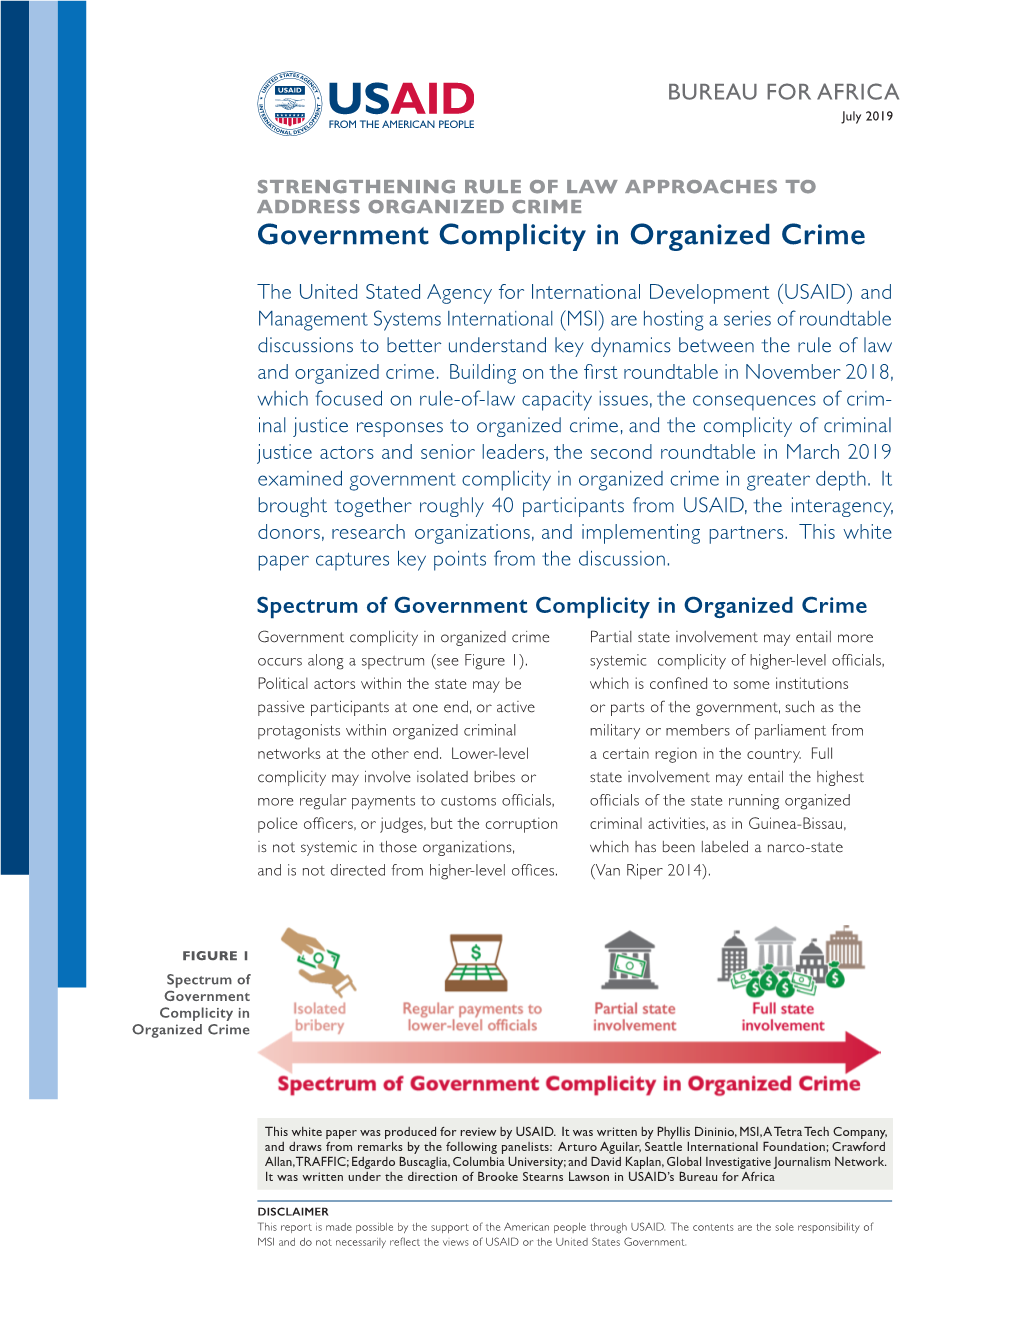 Government Complicity in Organized Crime